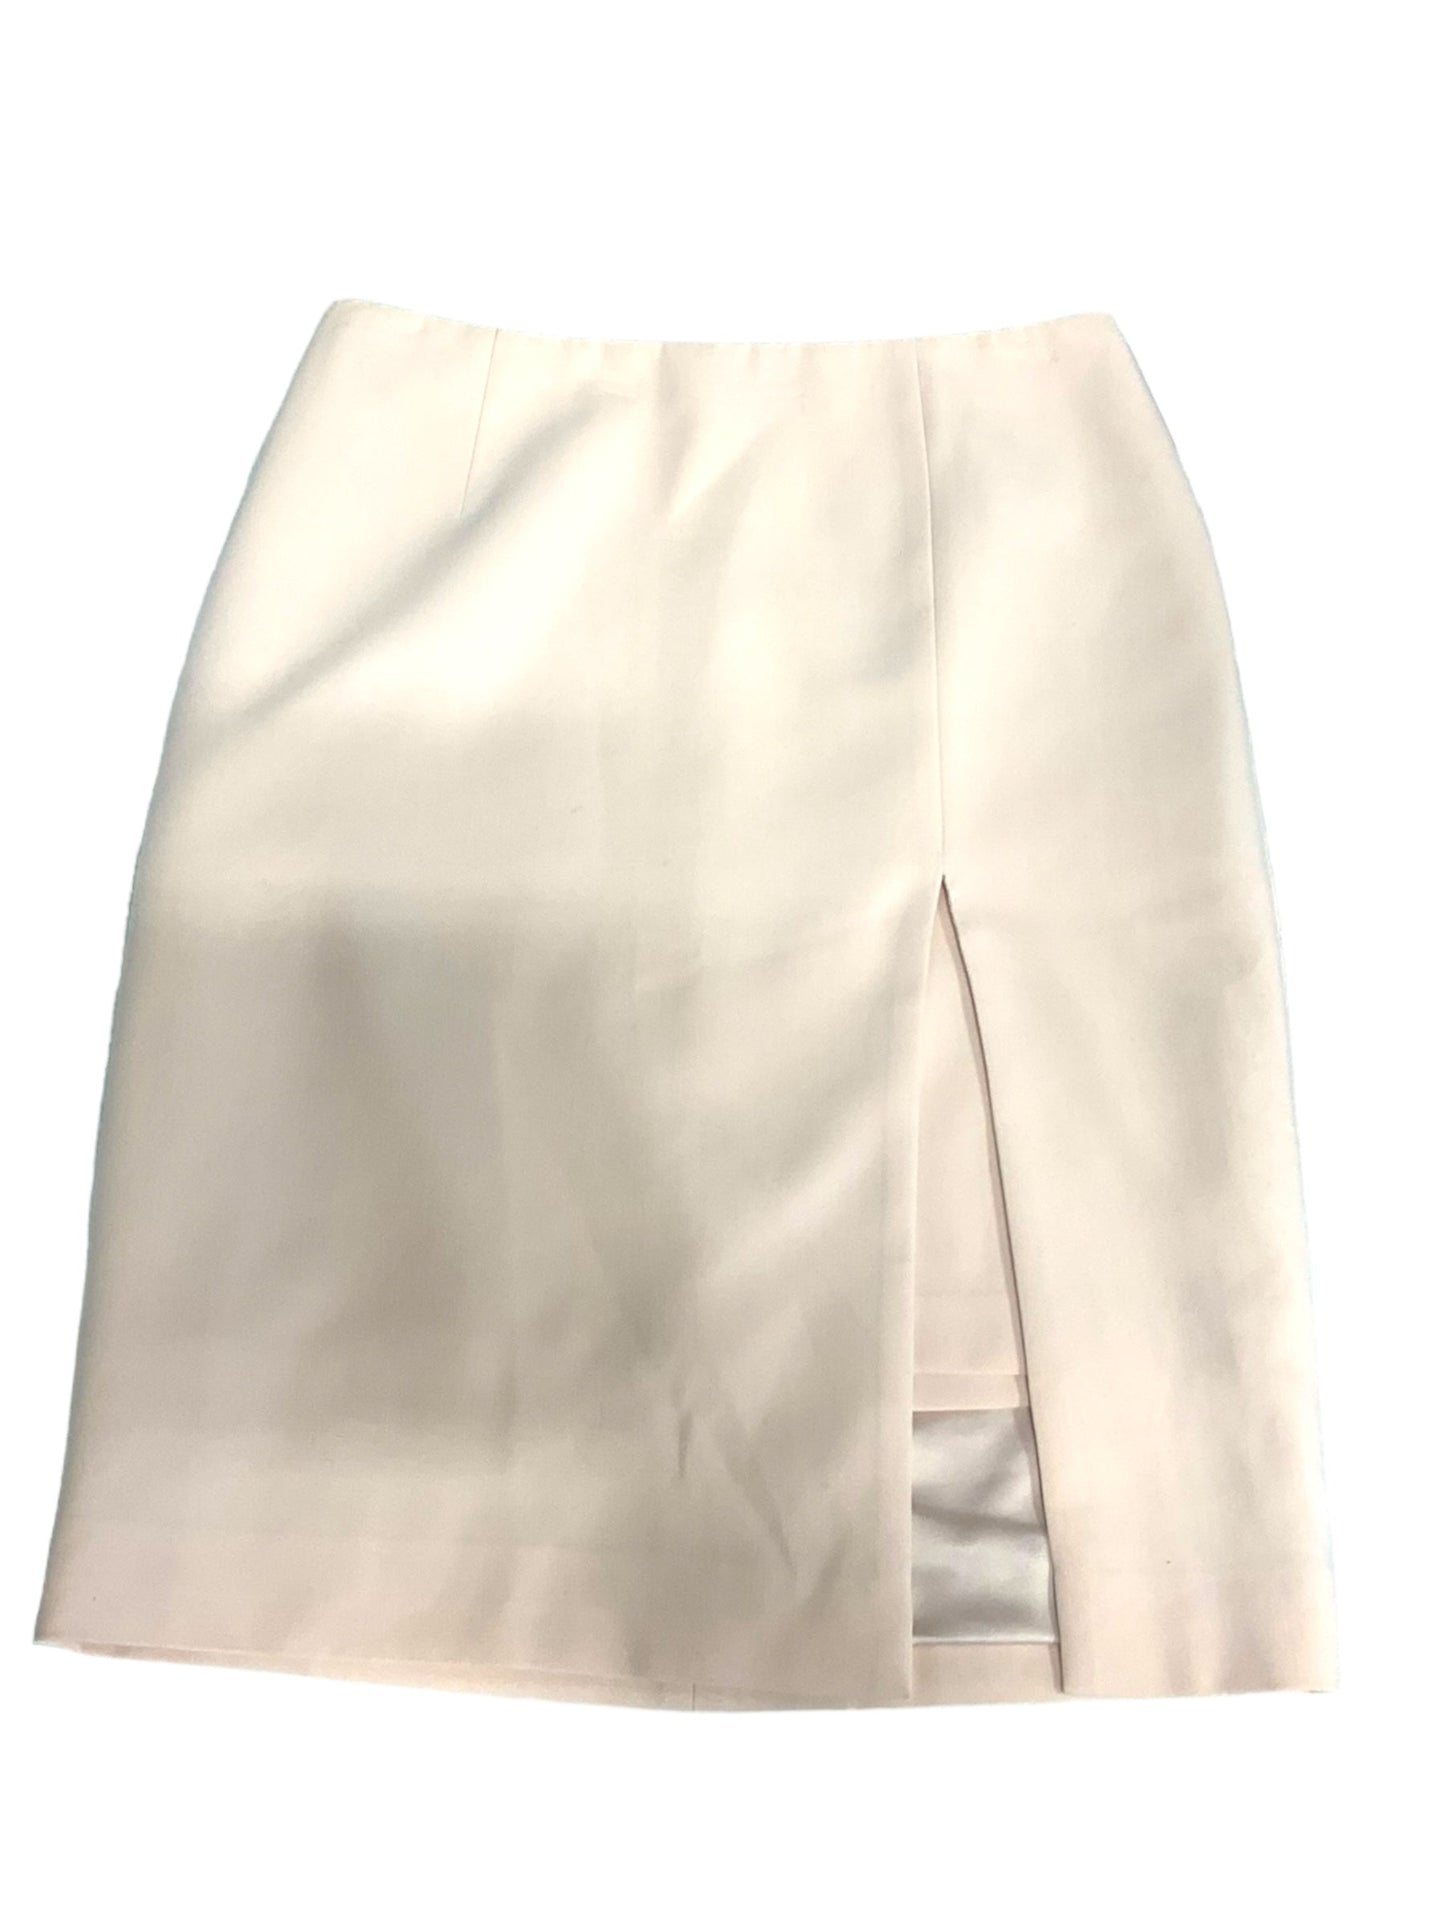 Pink Skirt Midi White House Black Market, Size 6